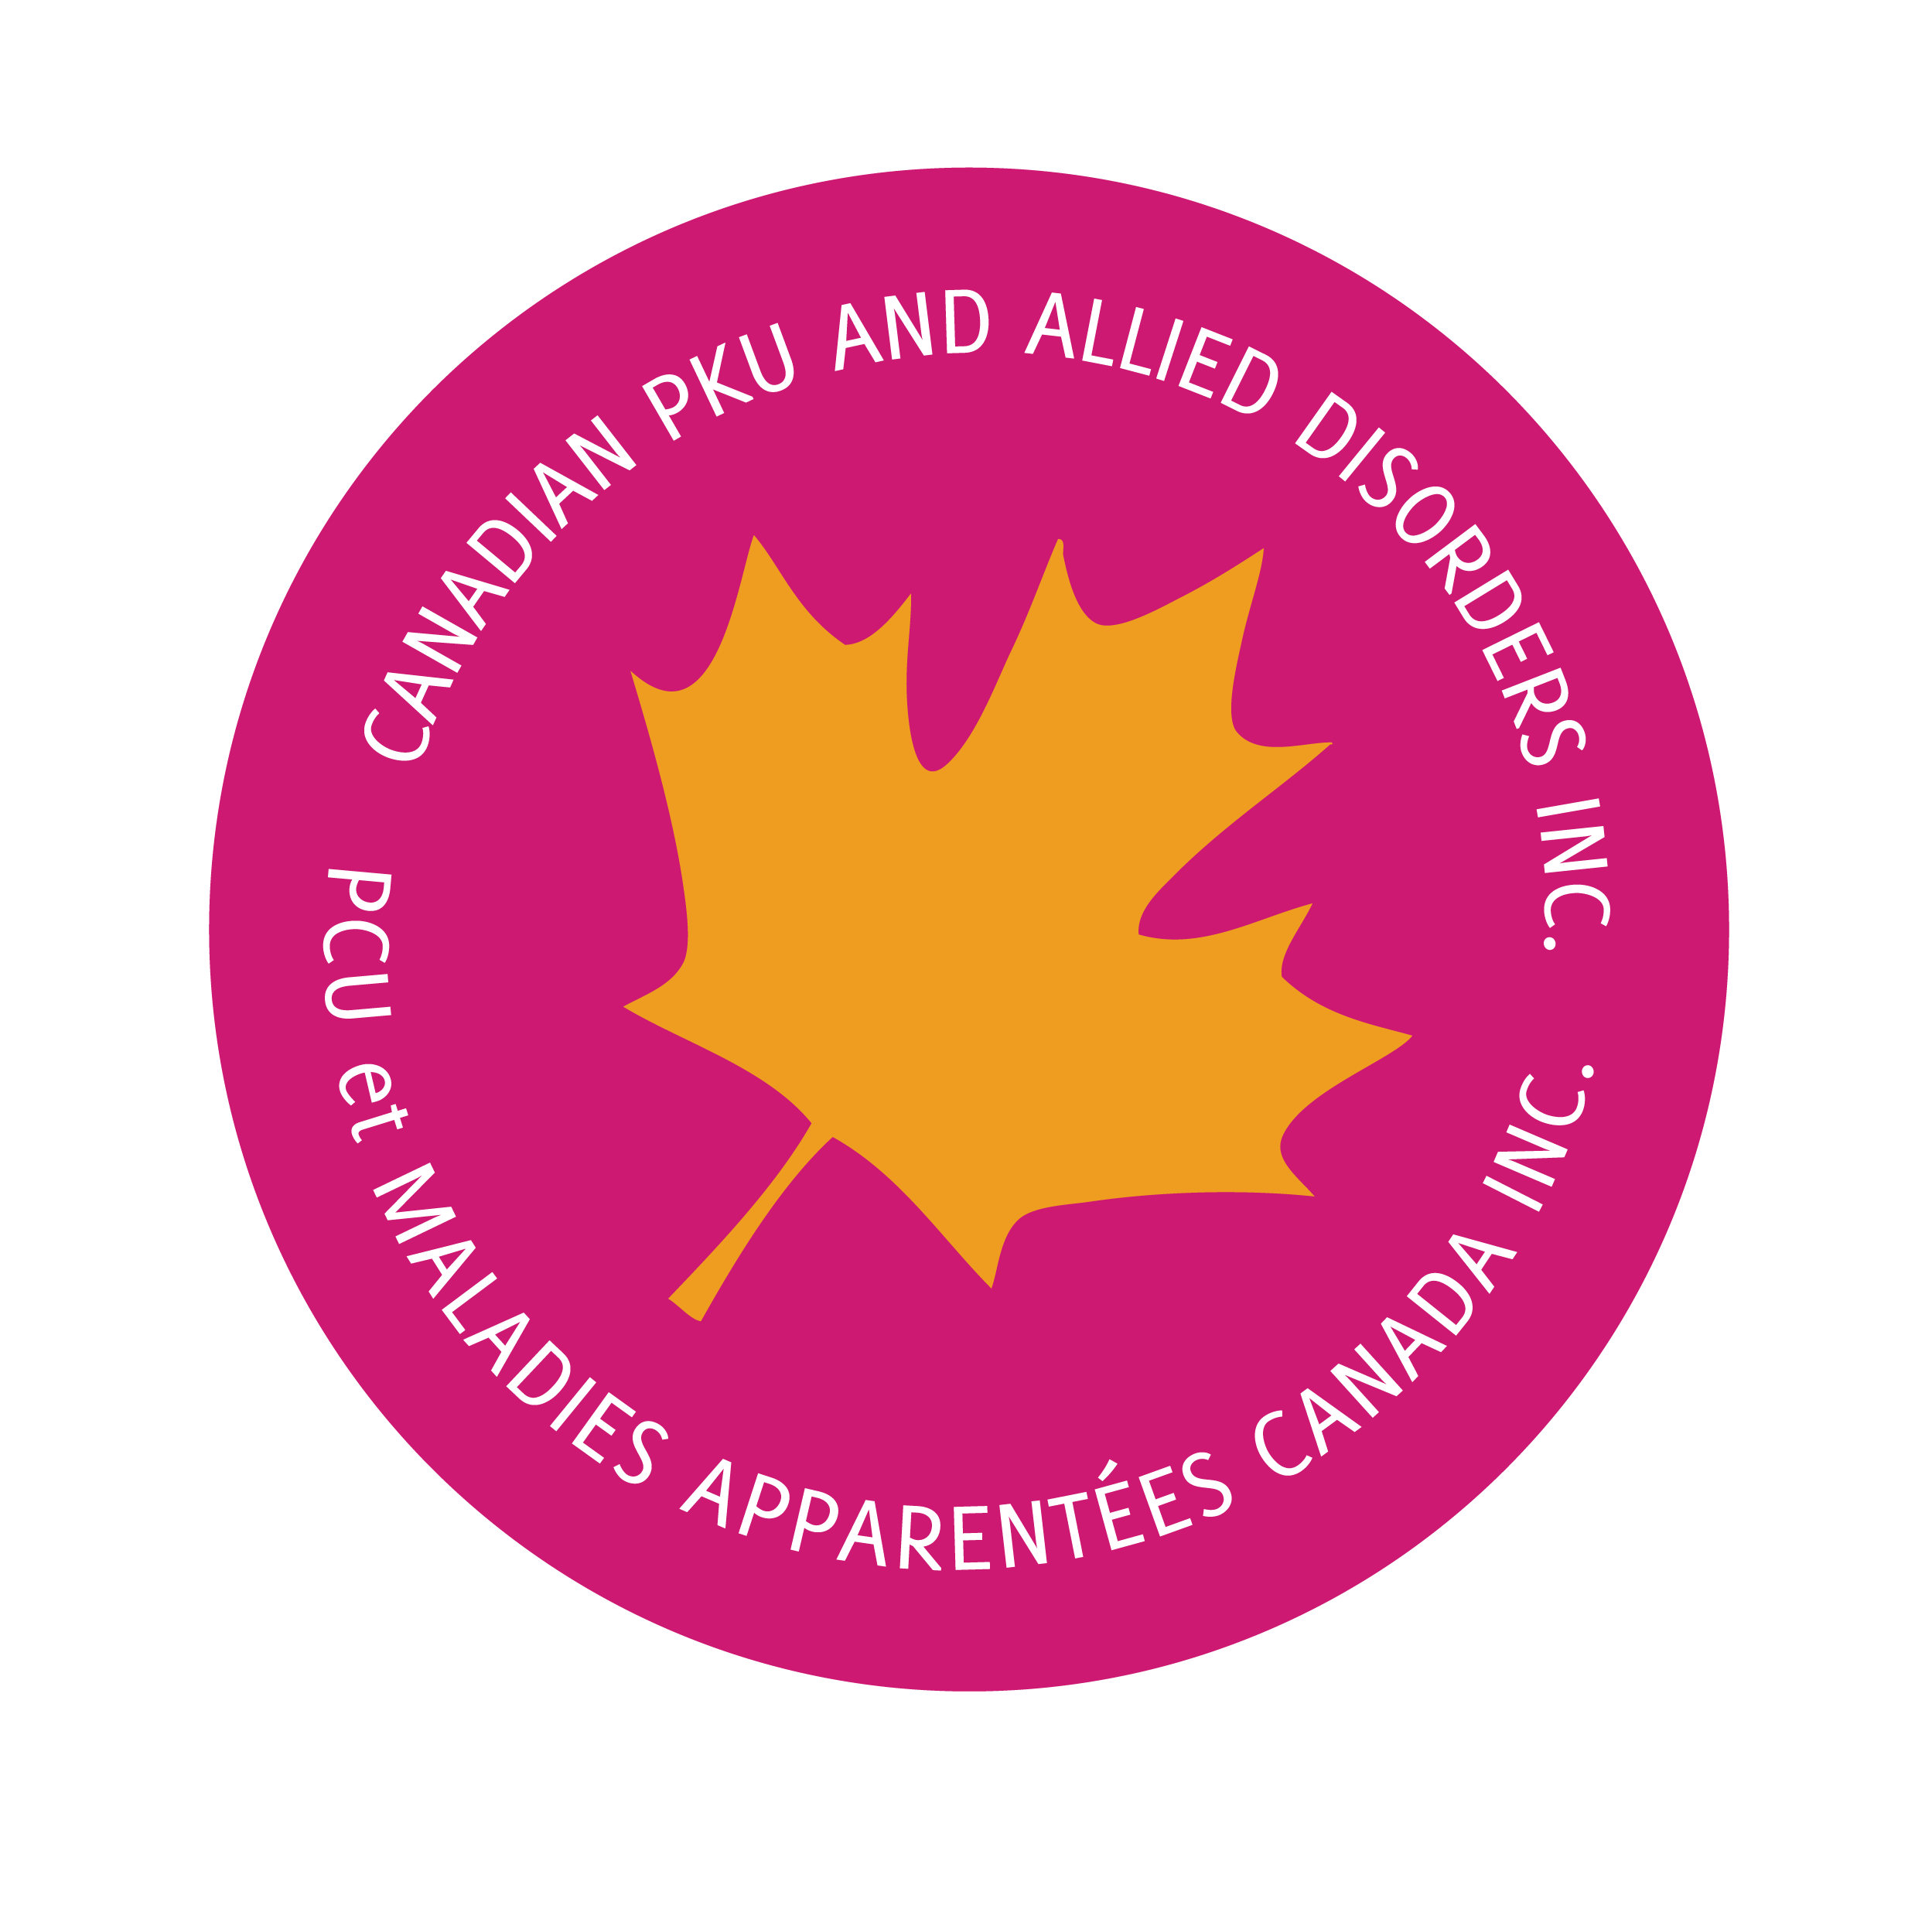 CanPKU logo